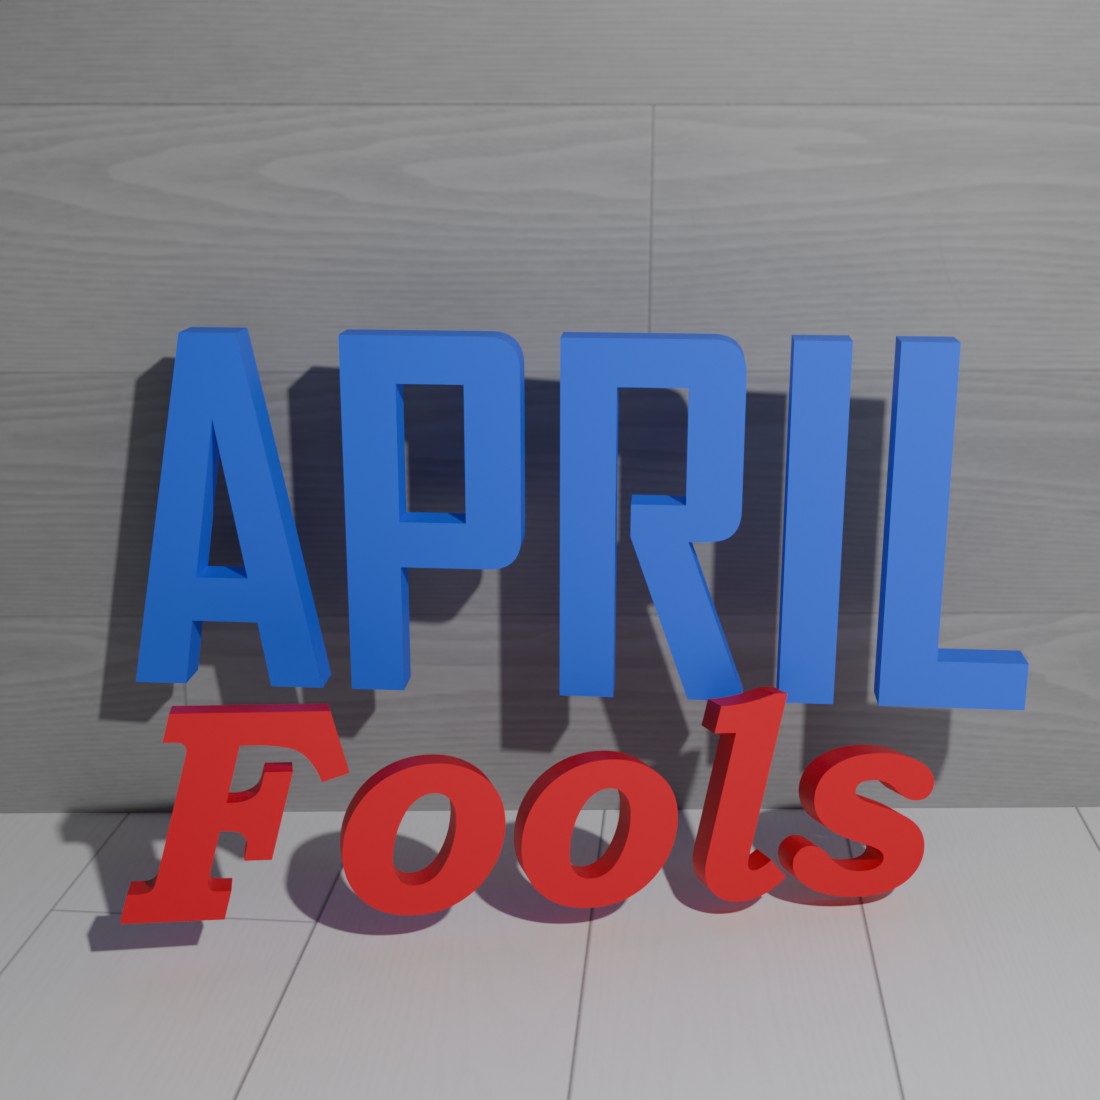 April Fools preview image.